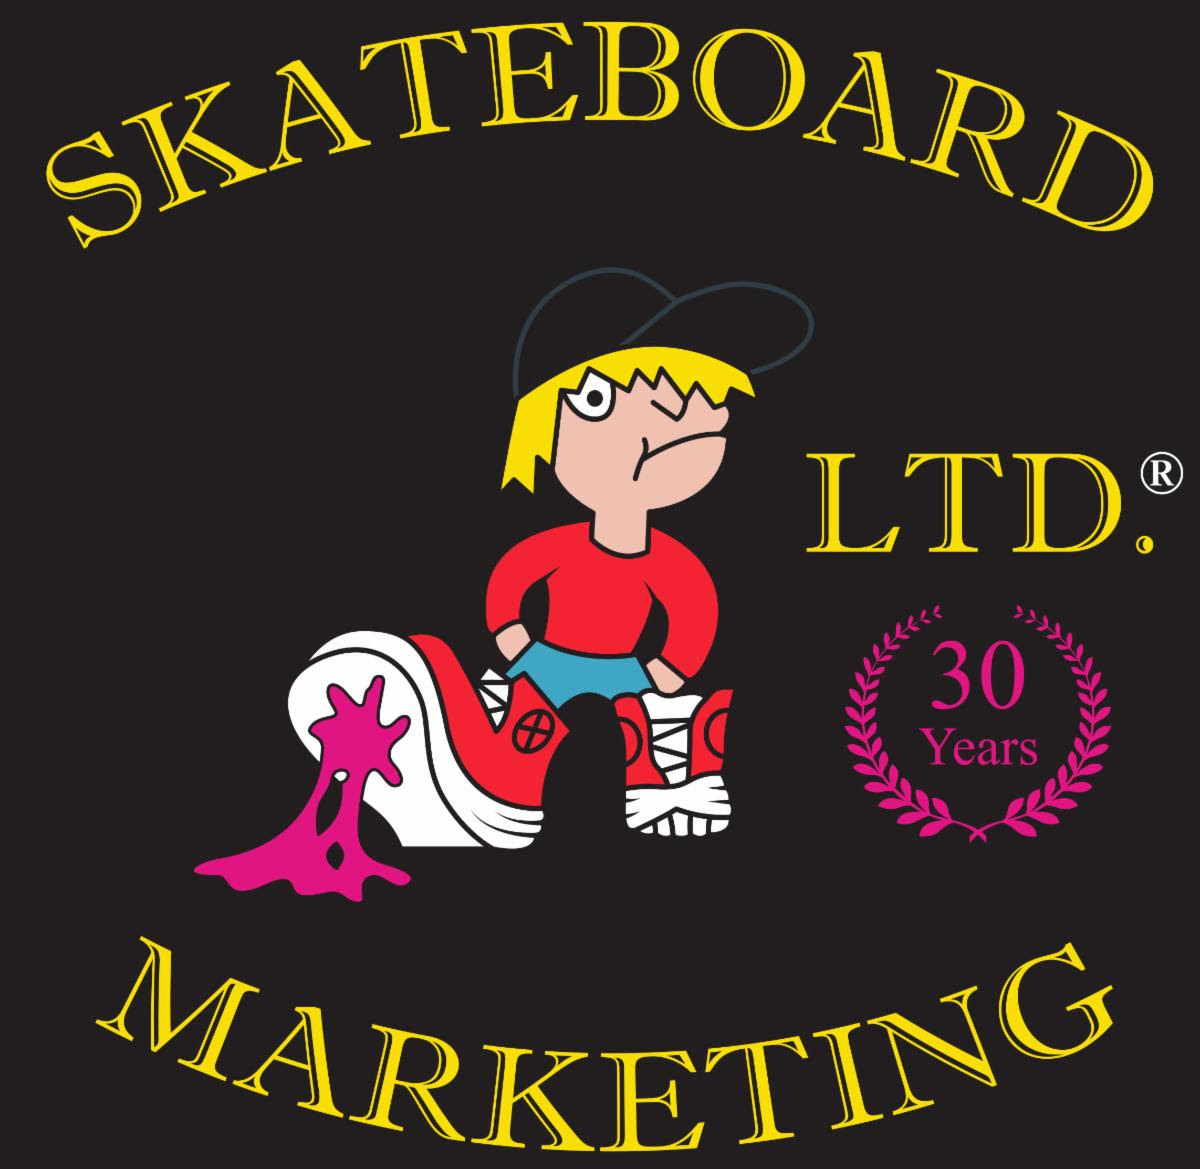 Ferris congrats Radio Promo Powerhouse Skateboard Marketing Ltd. Celebrates 30th Anniversary